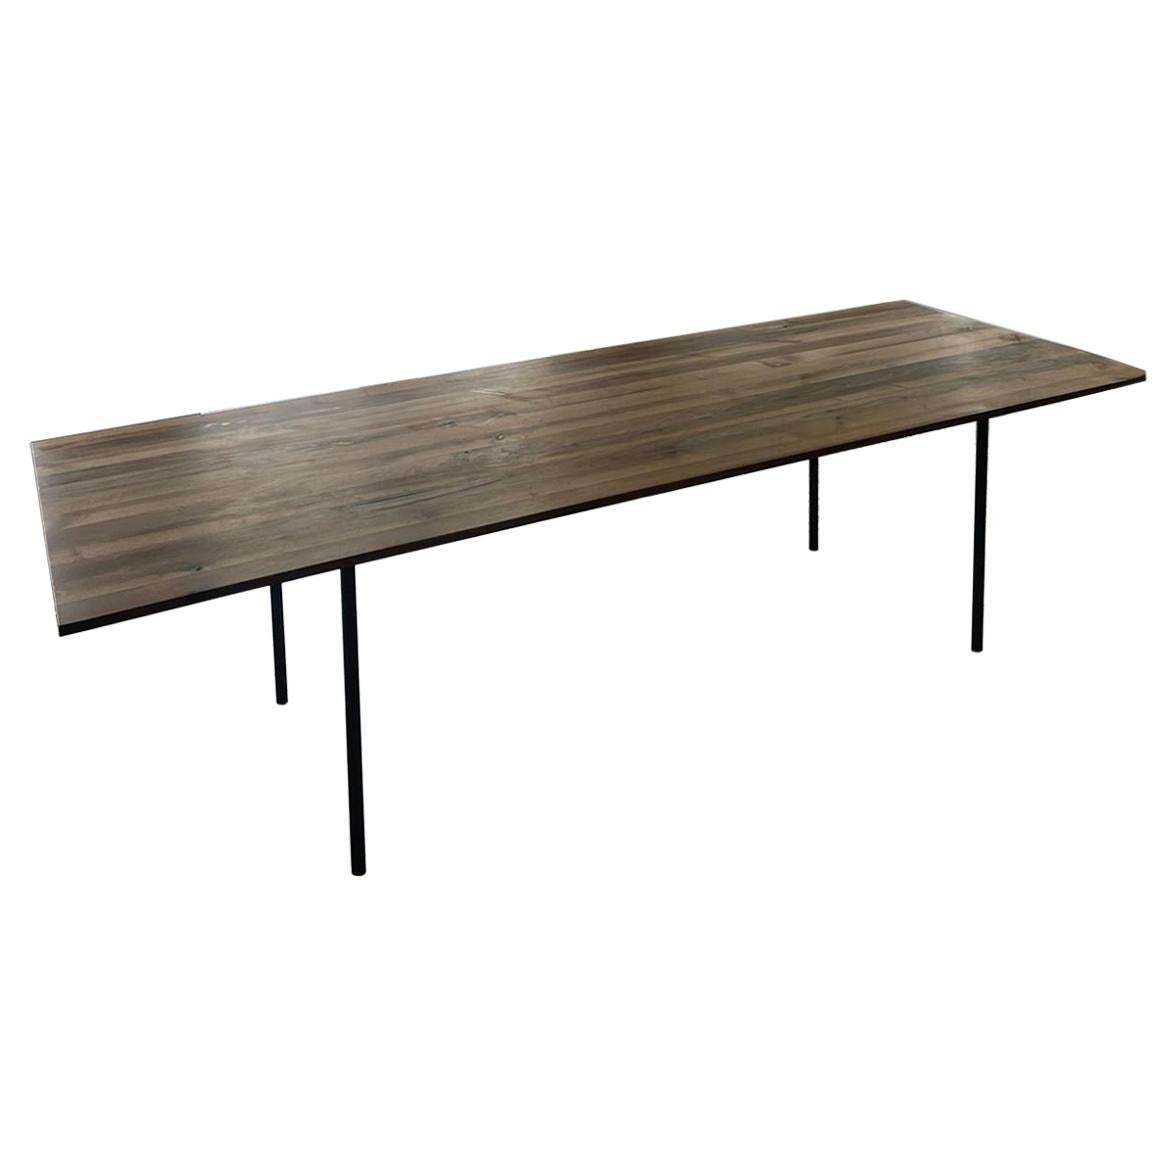 E15 Anton European Walnut Top Wood Table designed by Philipp Mainzer